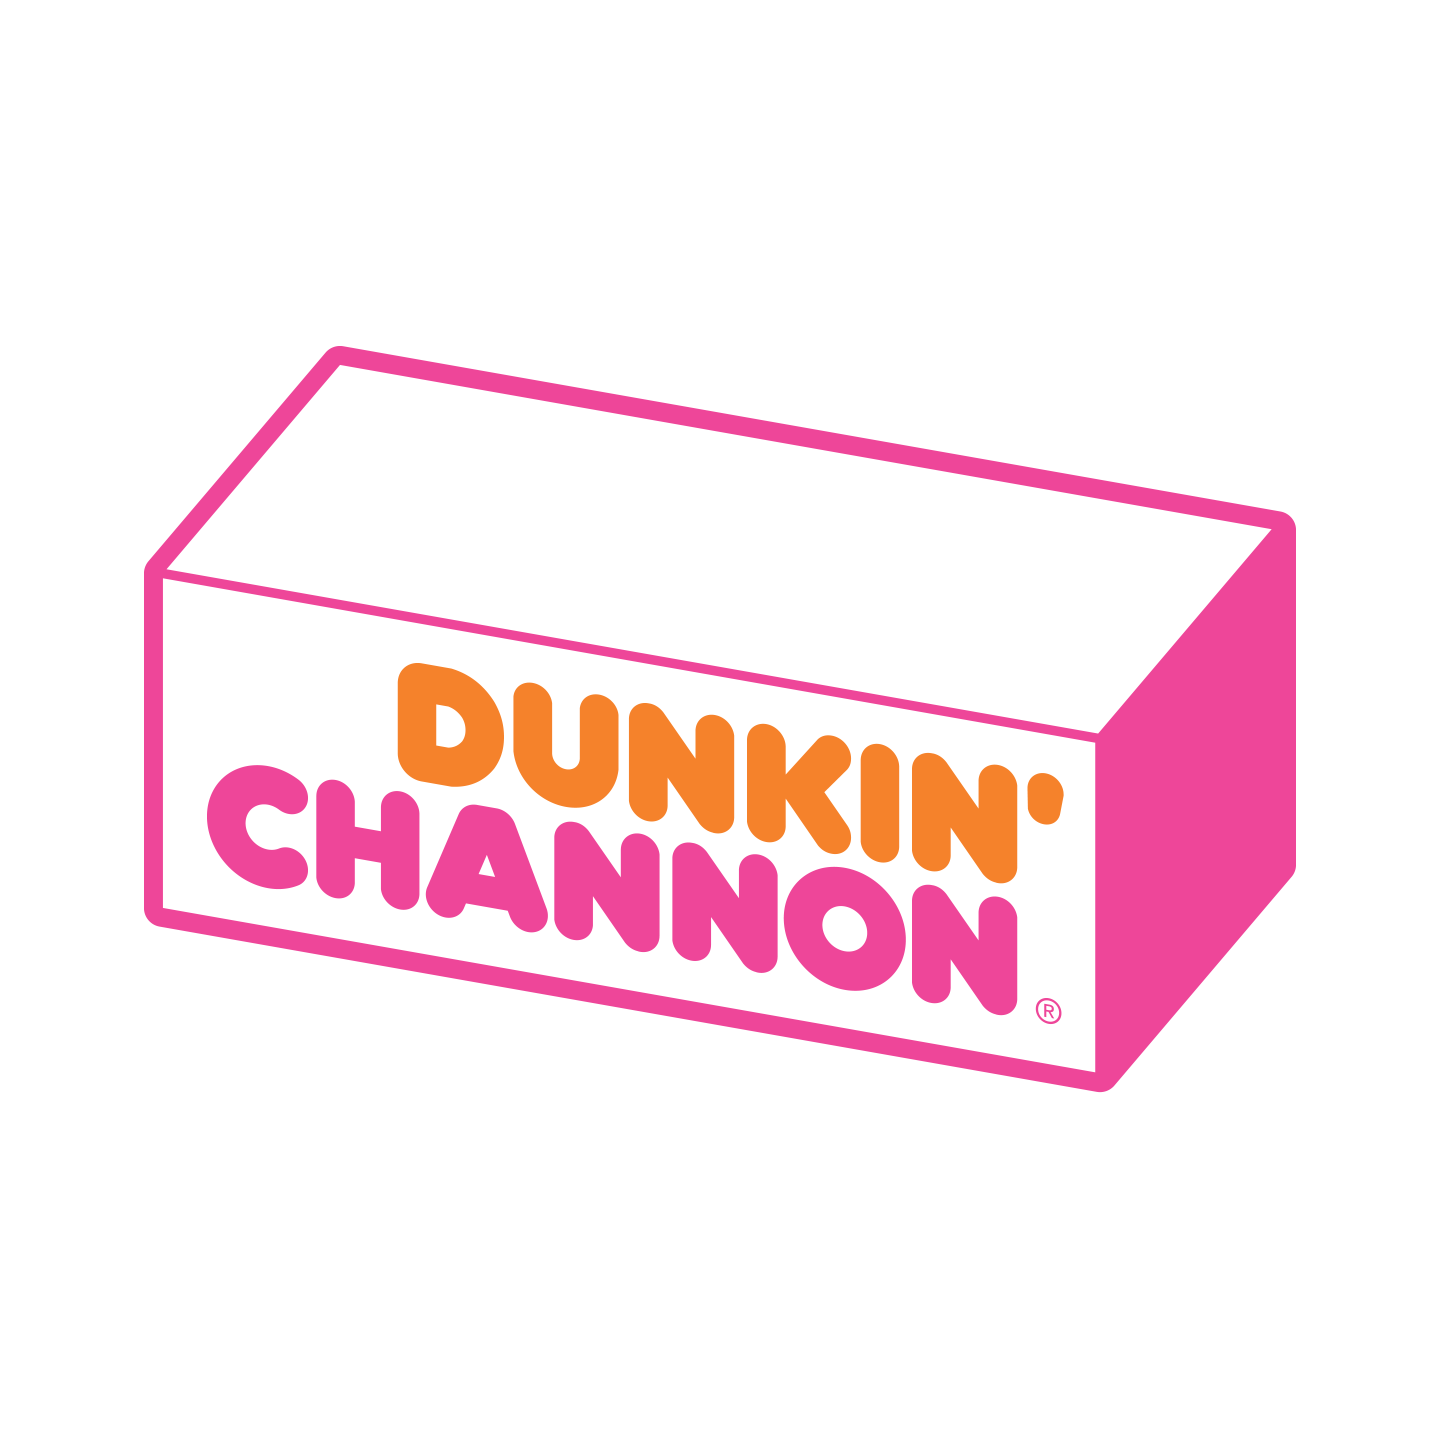 Dunkin Channon Image